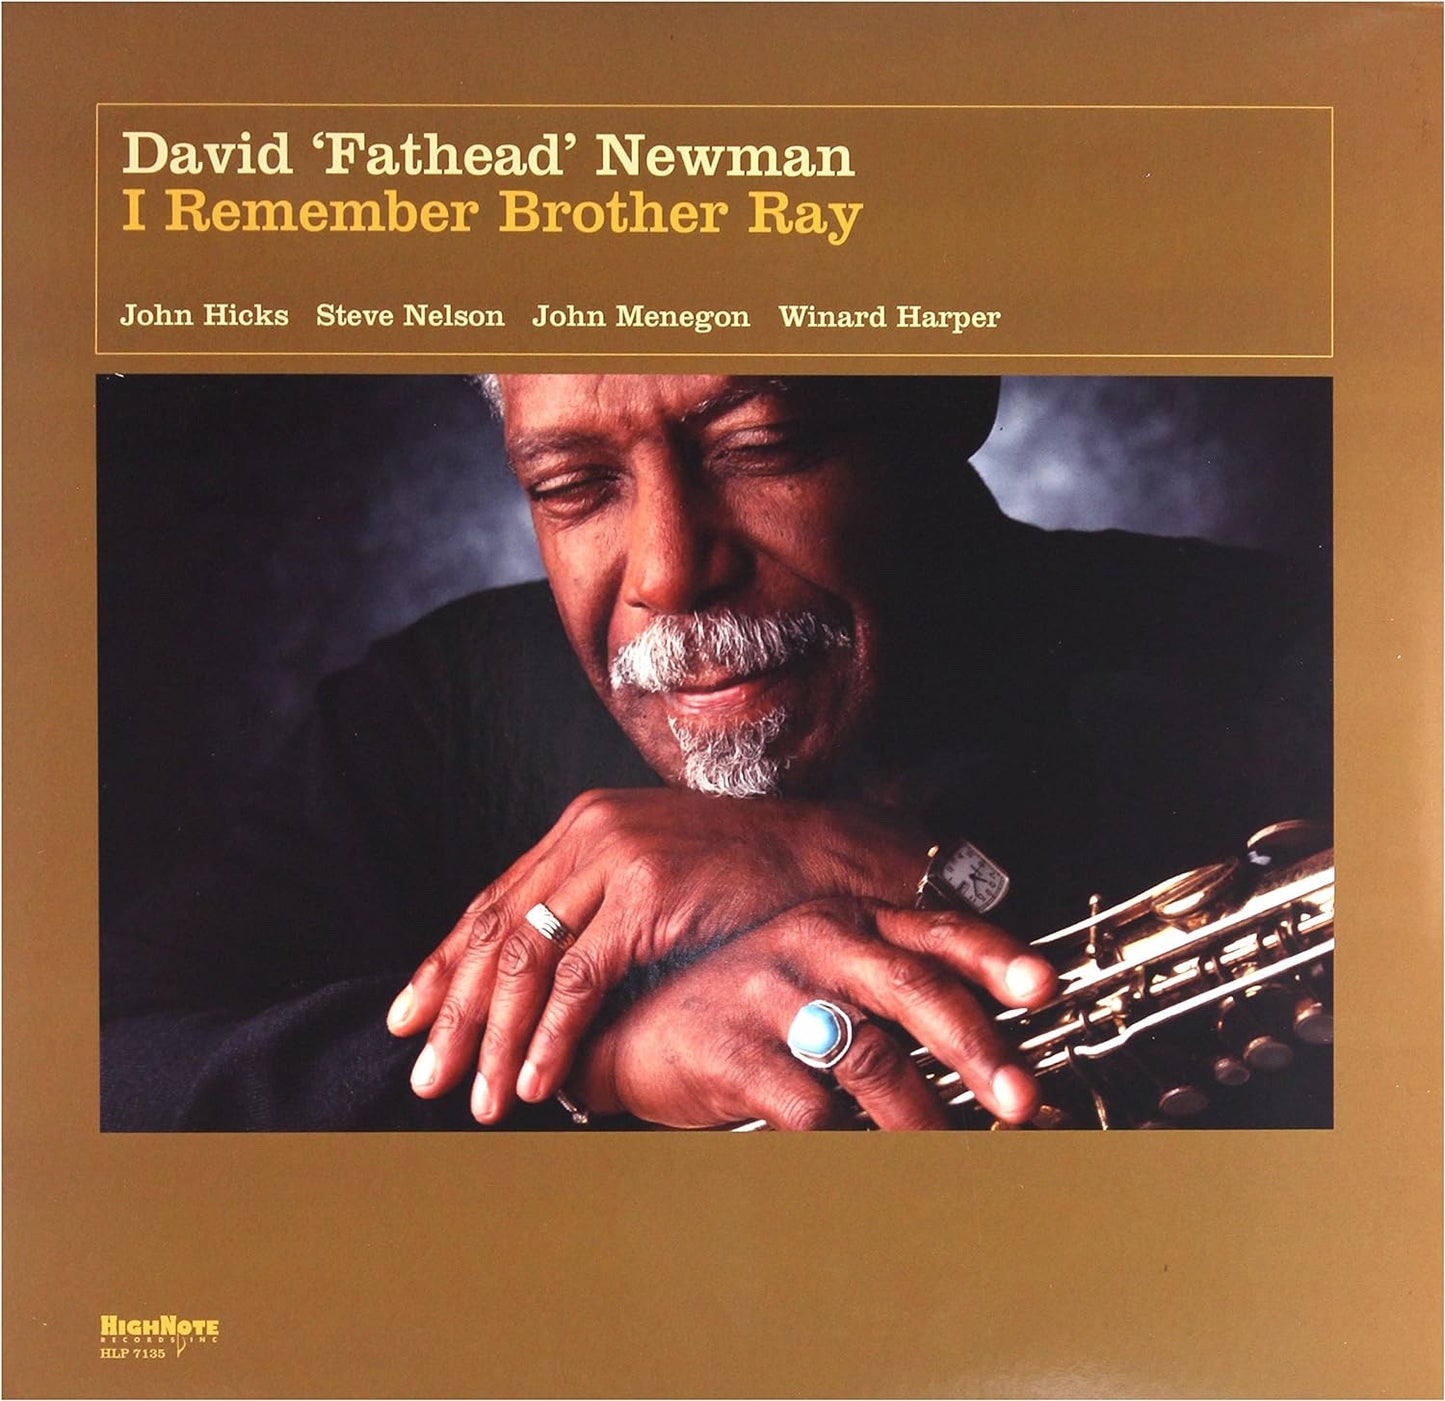 David Fathead Newman - I remember Brother Ray (Vinile 180gr.)